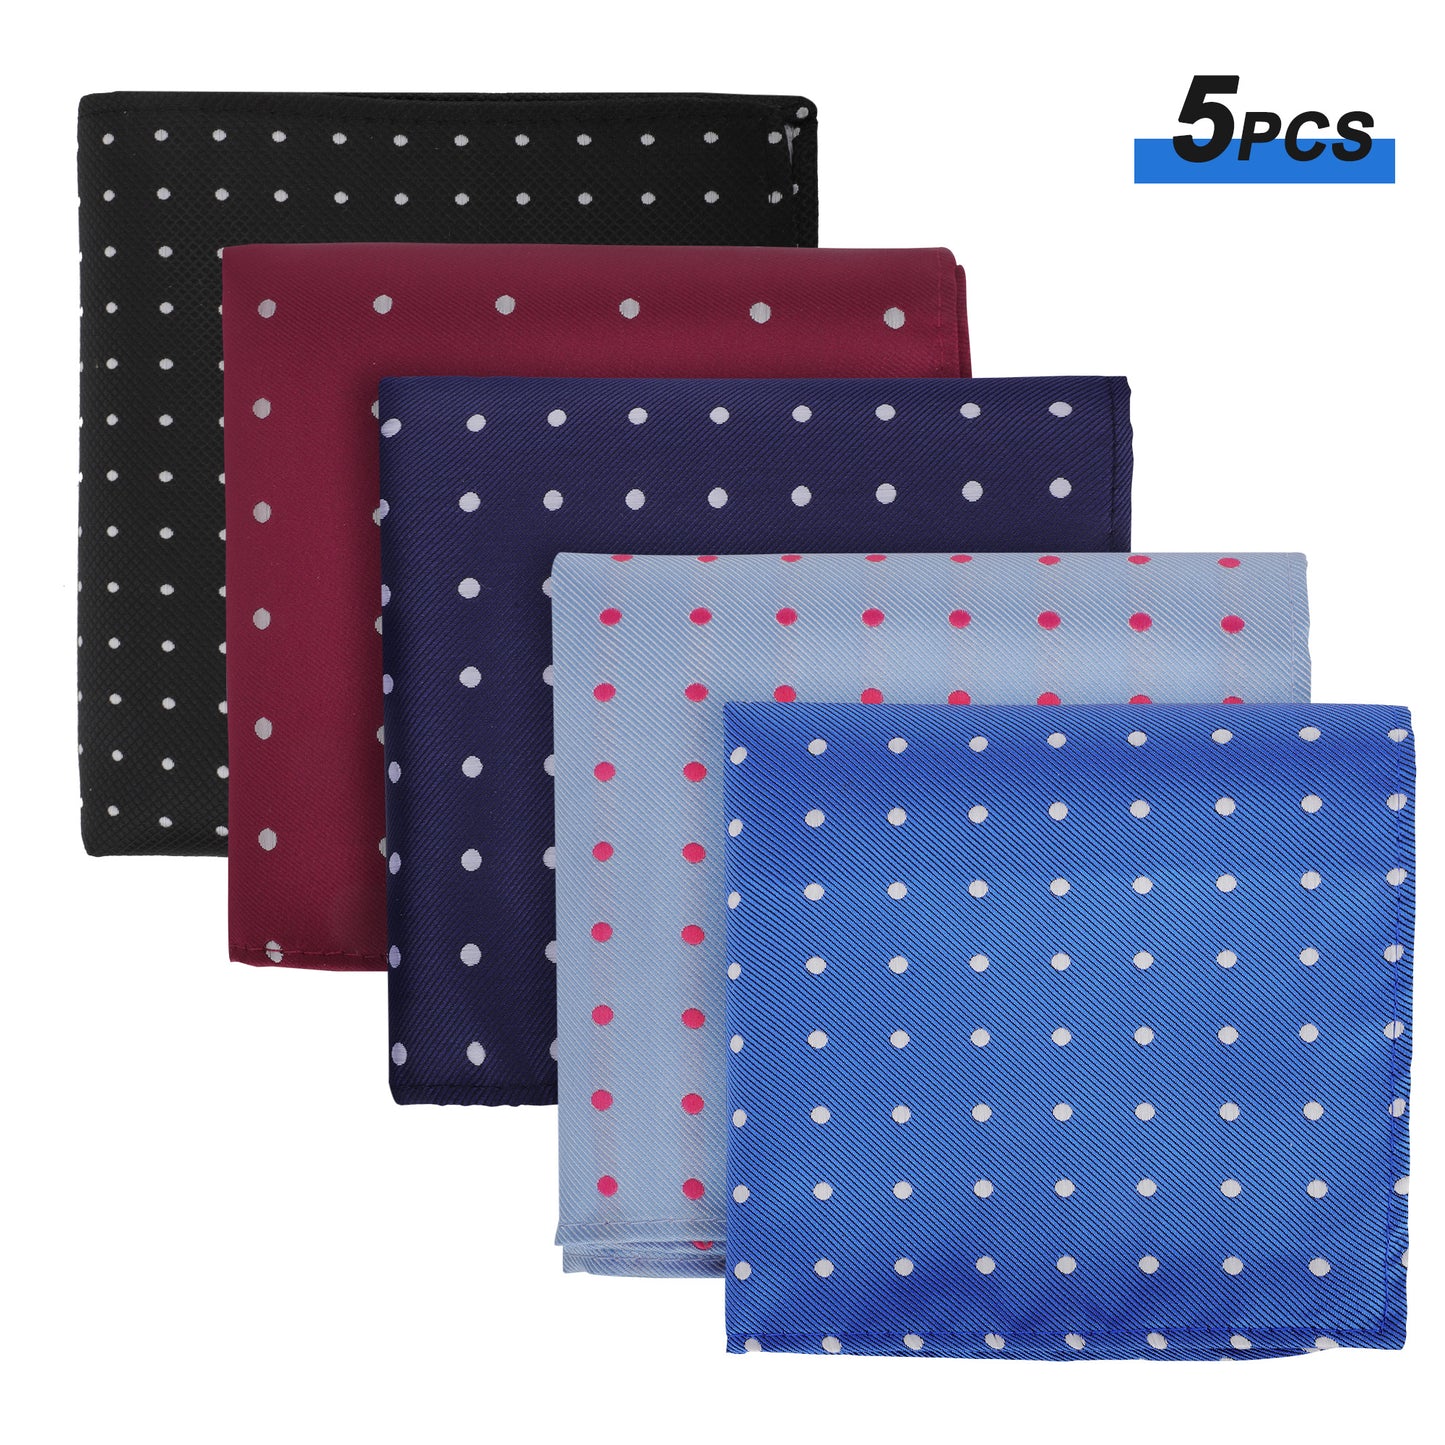 5Pcs Assorted Mens Pocket Square Handkerchiefs Set - Dot Pattern Colored Men Assorted Hankies Men Business Suit Accessories best gift for Wedding Party